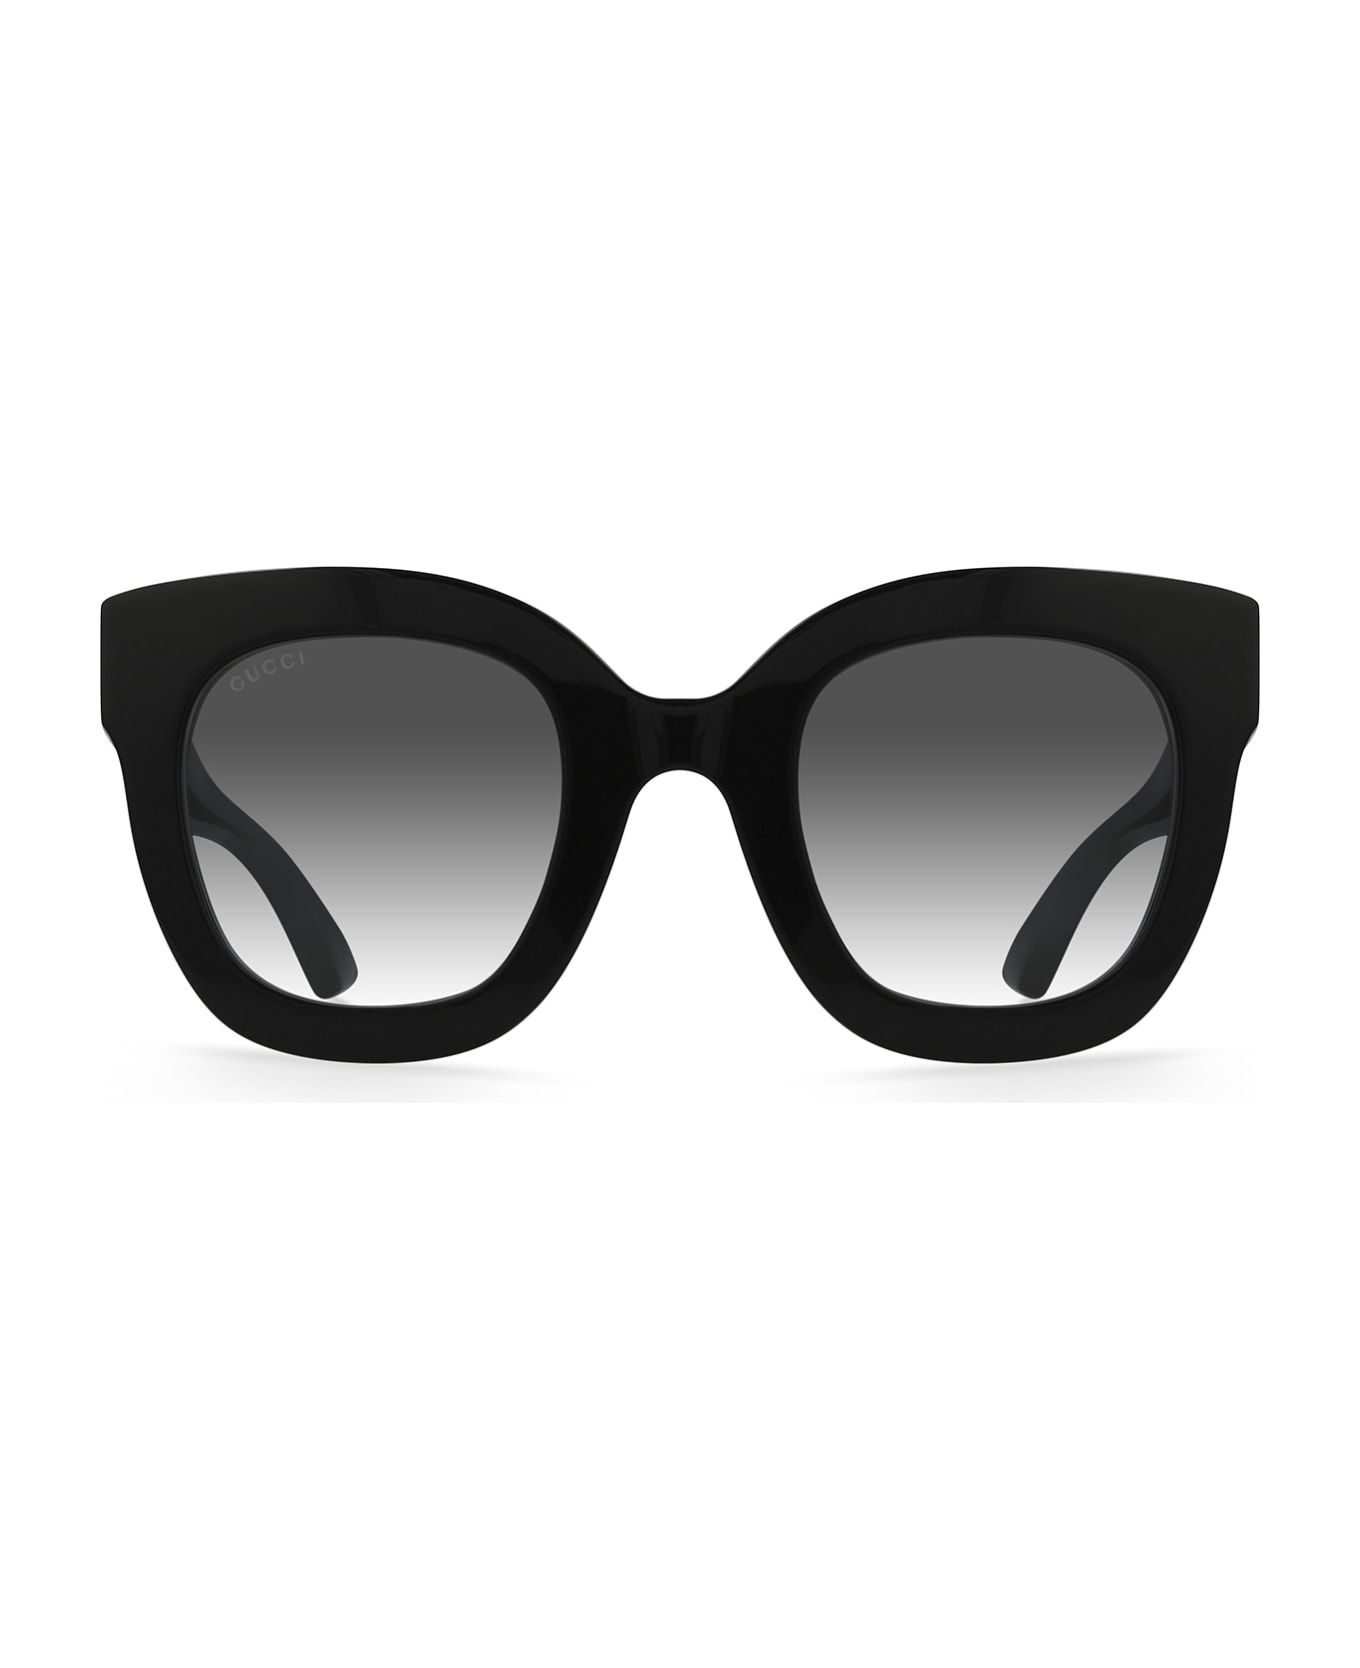 Gucci Eyewear Gg0208s Black Sunglasses - Black サングラス